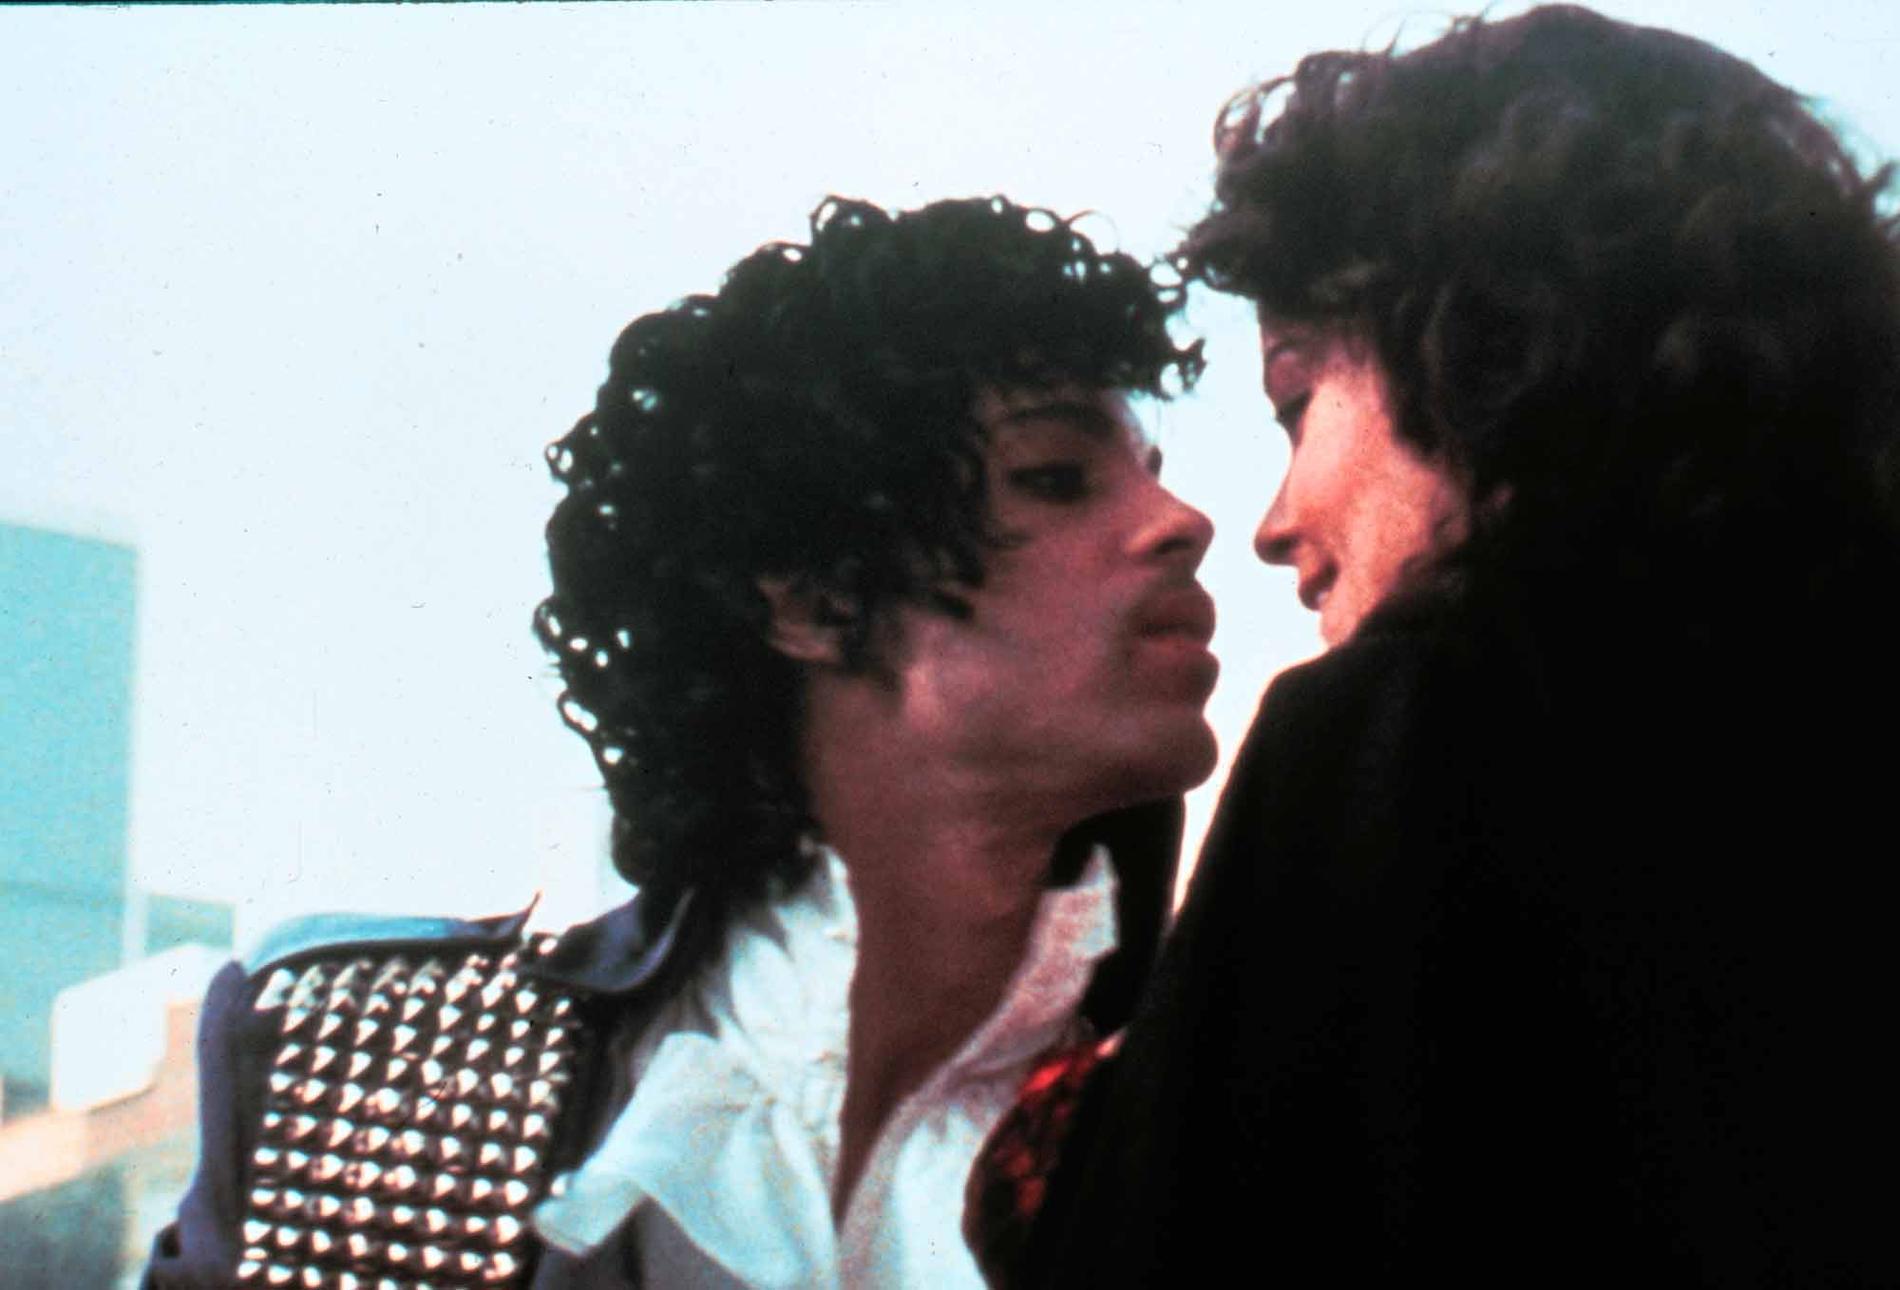 Prince och Appolonia Kotero i musikfilmen ”Purple rain” 1984.